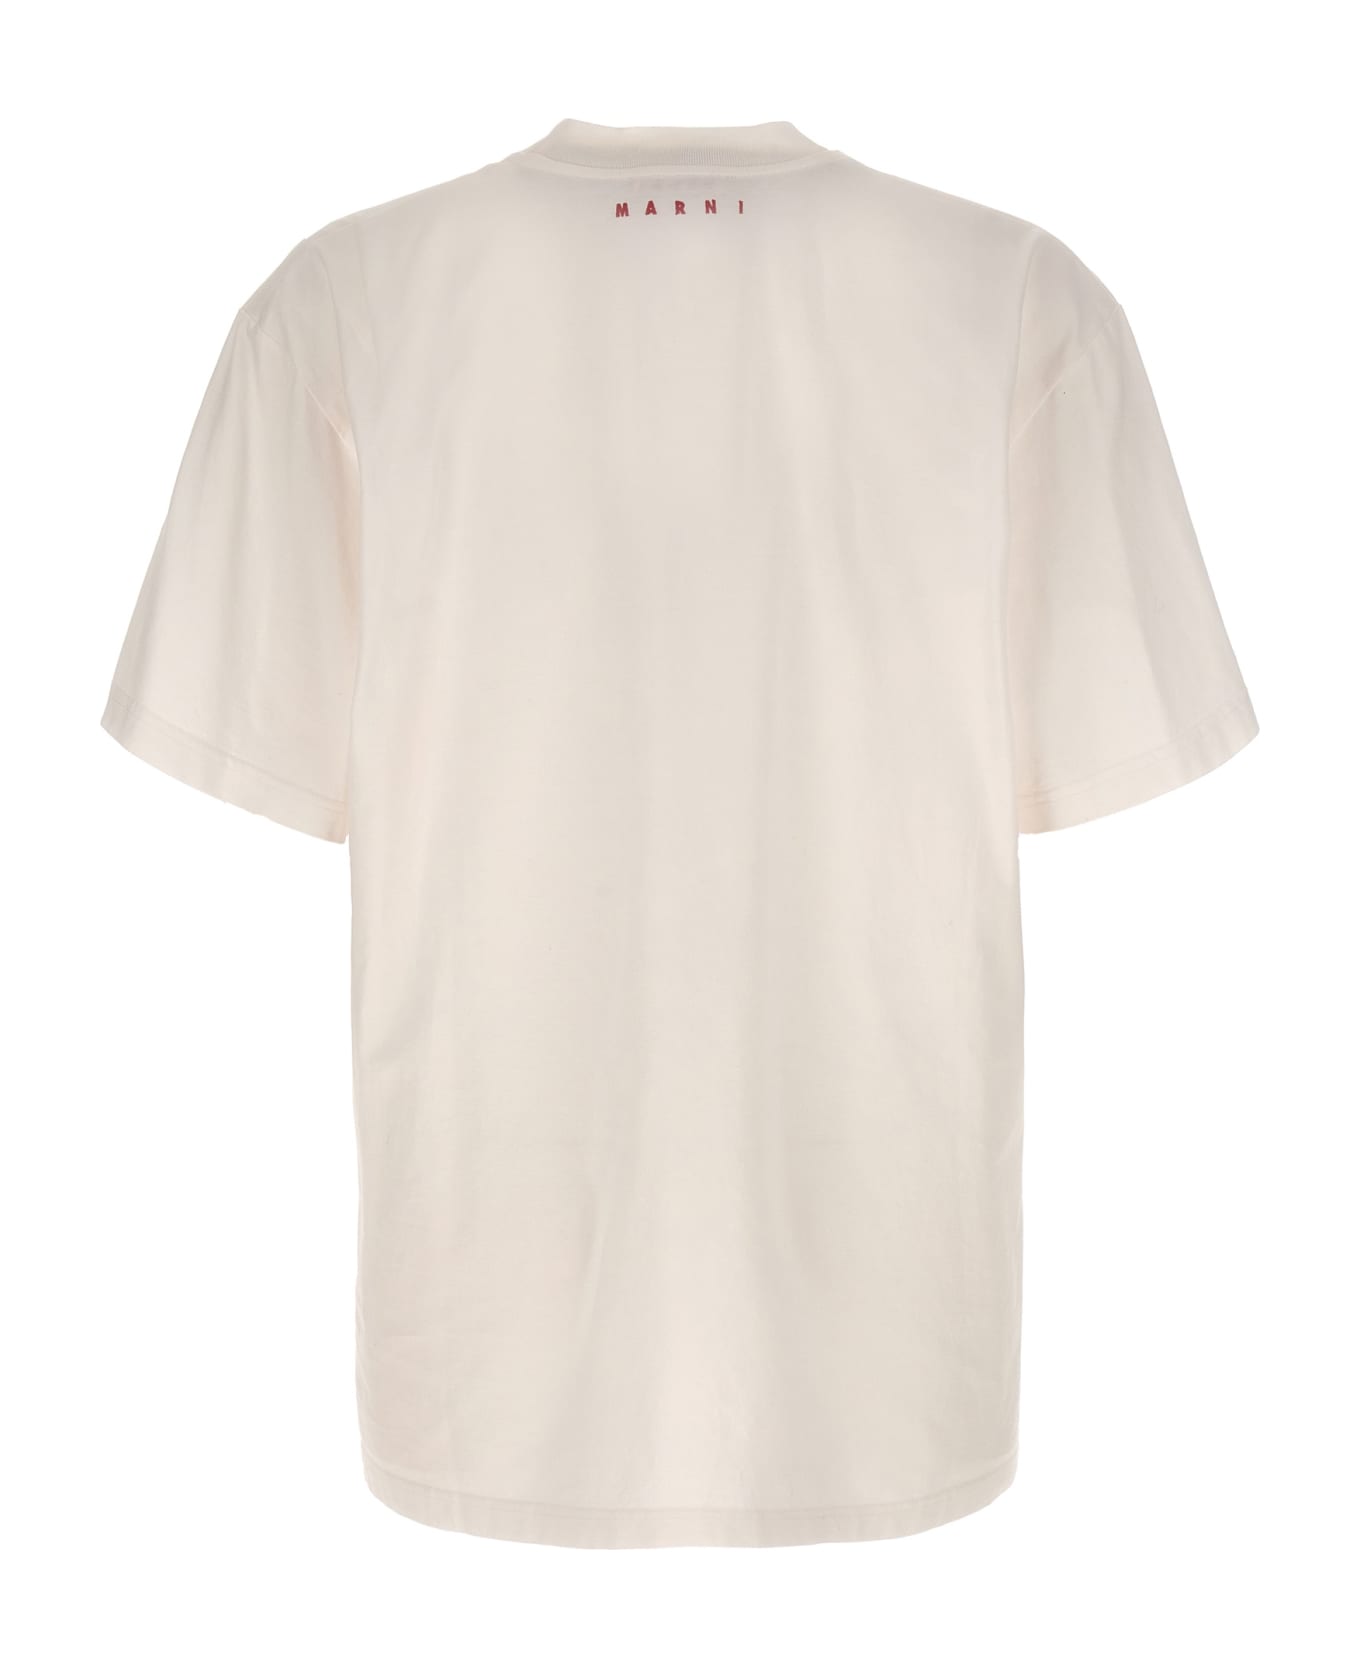 Marni 'bubble' T-shirt - White